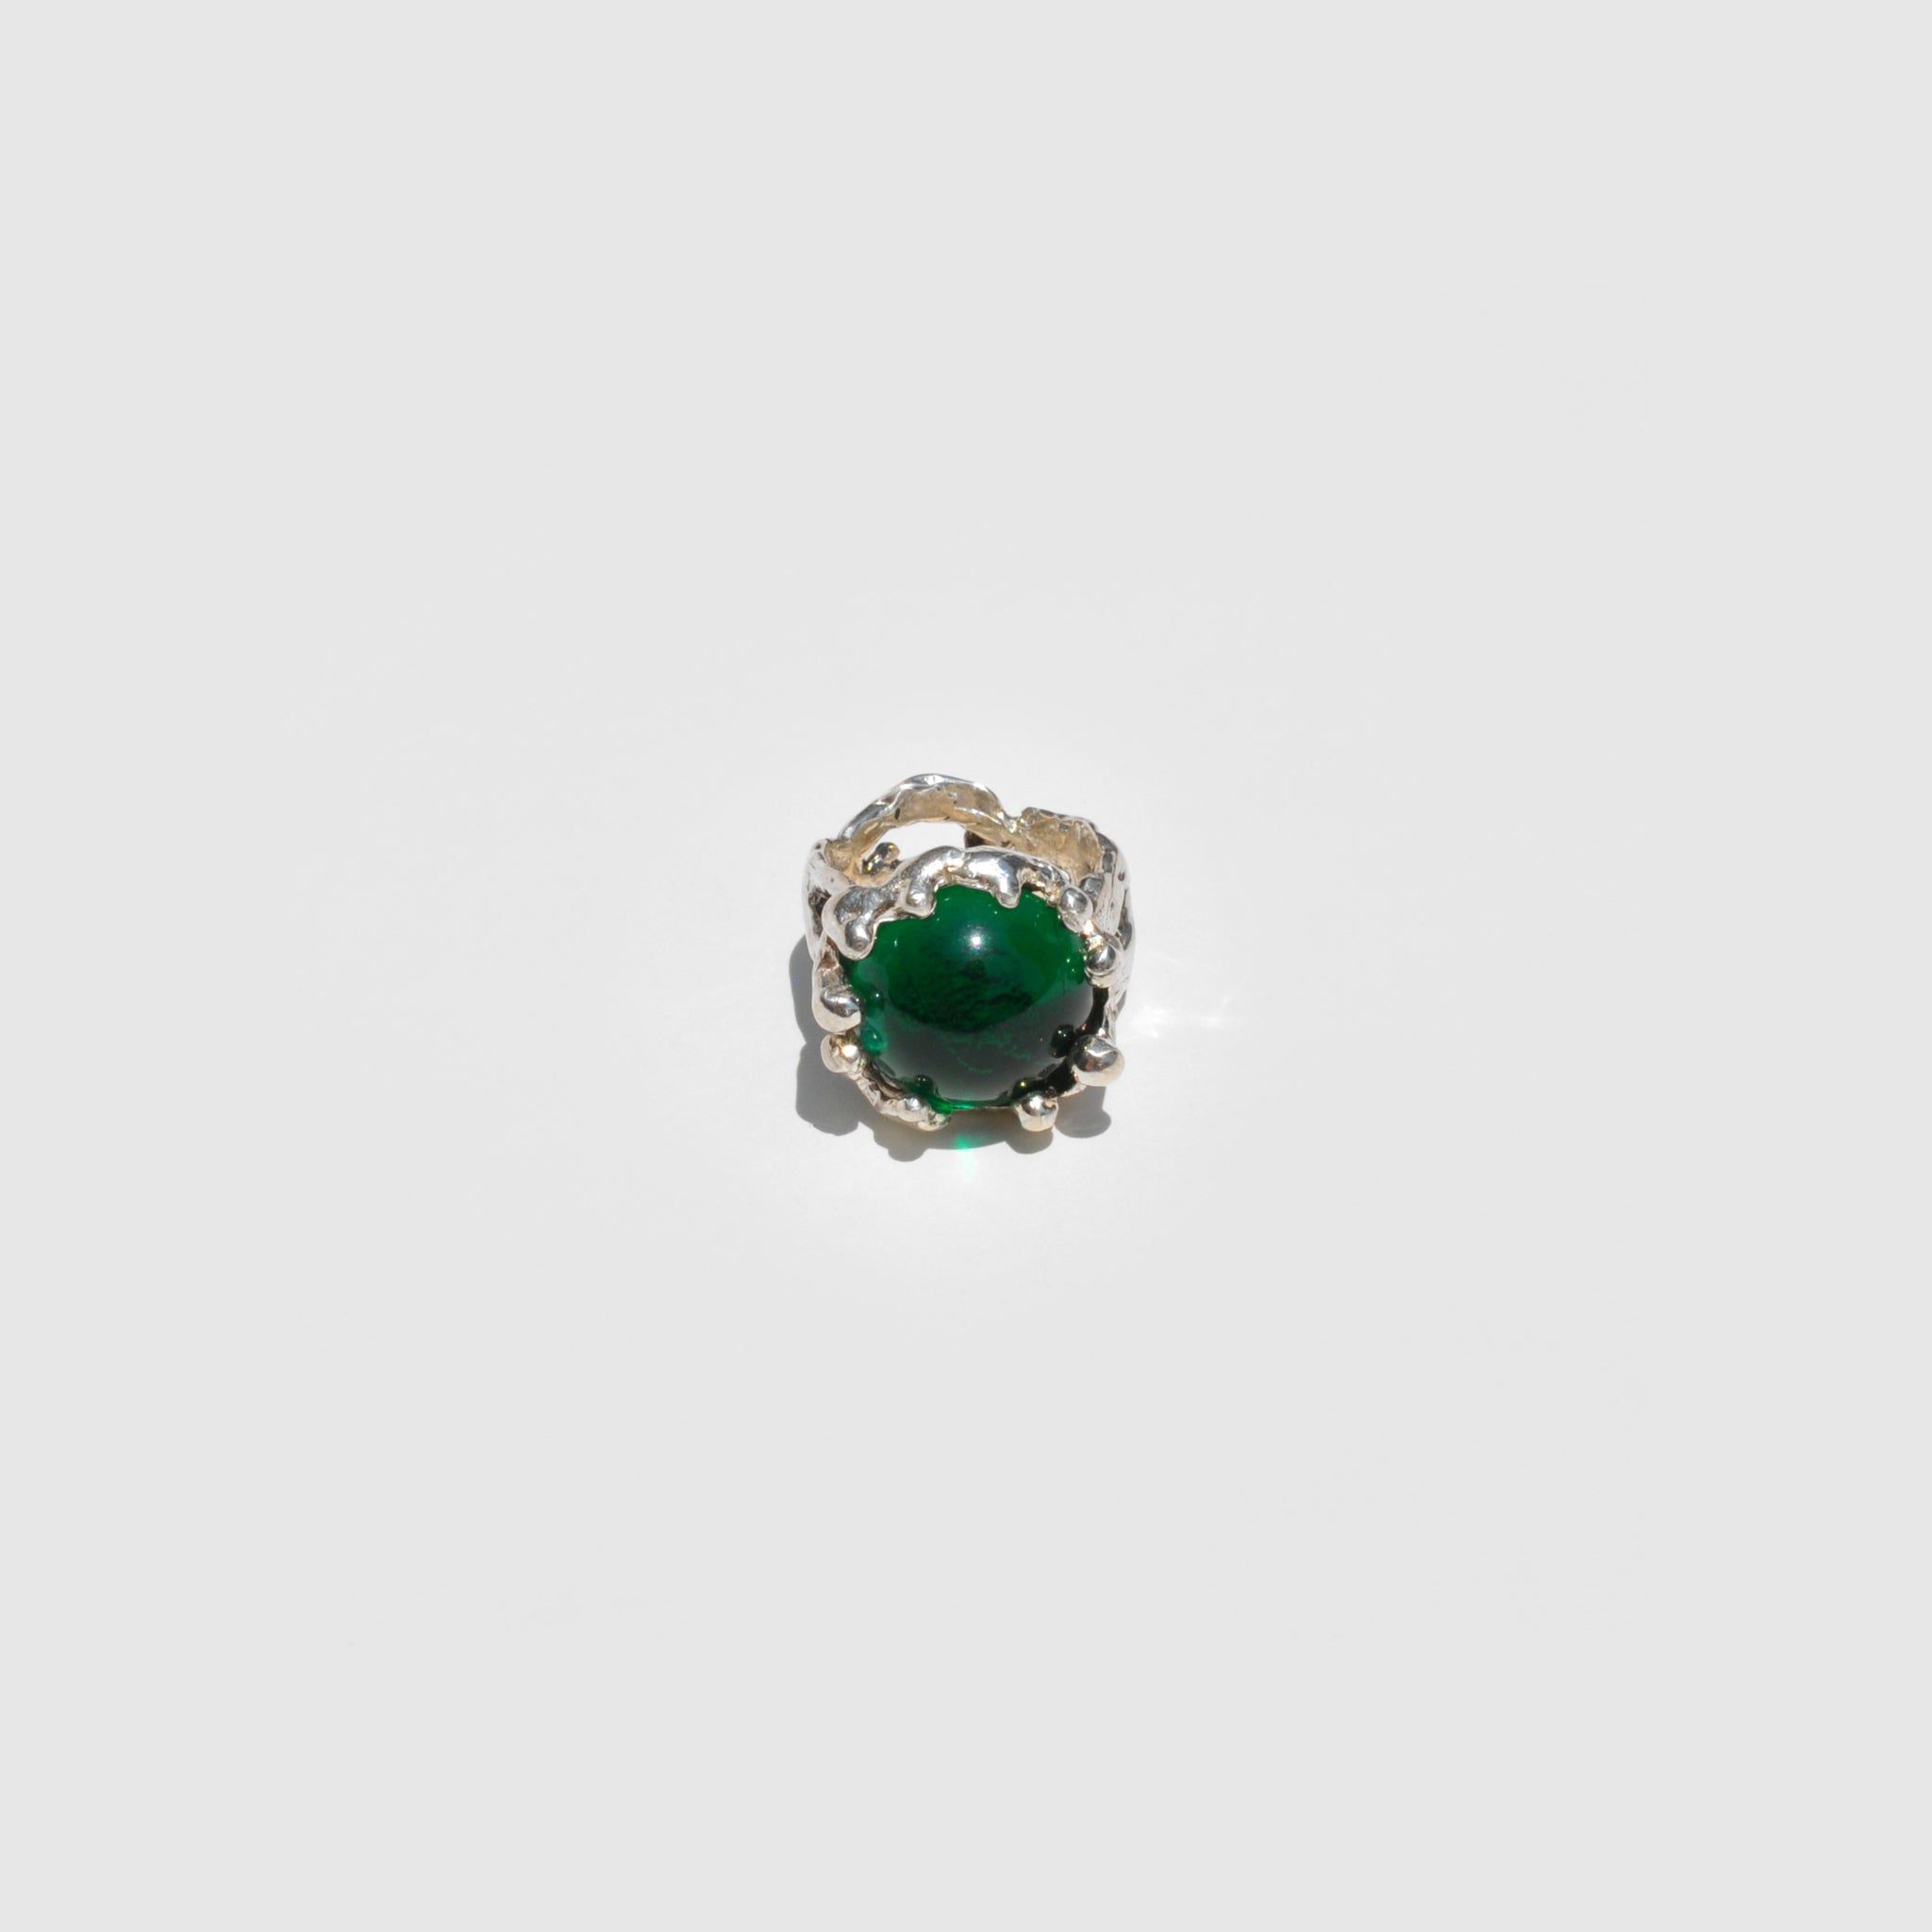 Mondo Mondo - Magician Ring - Emerald, front view, available at LCD.